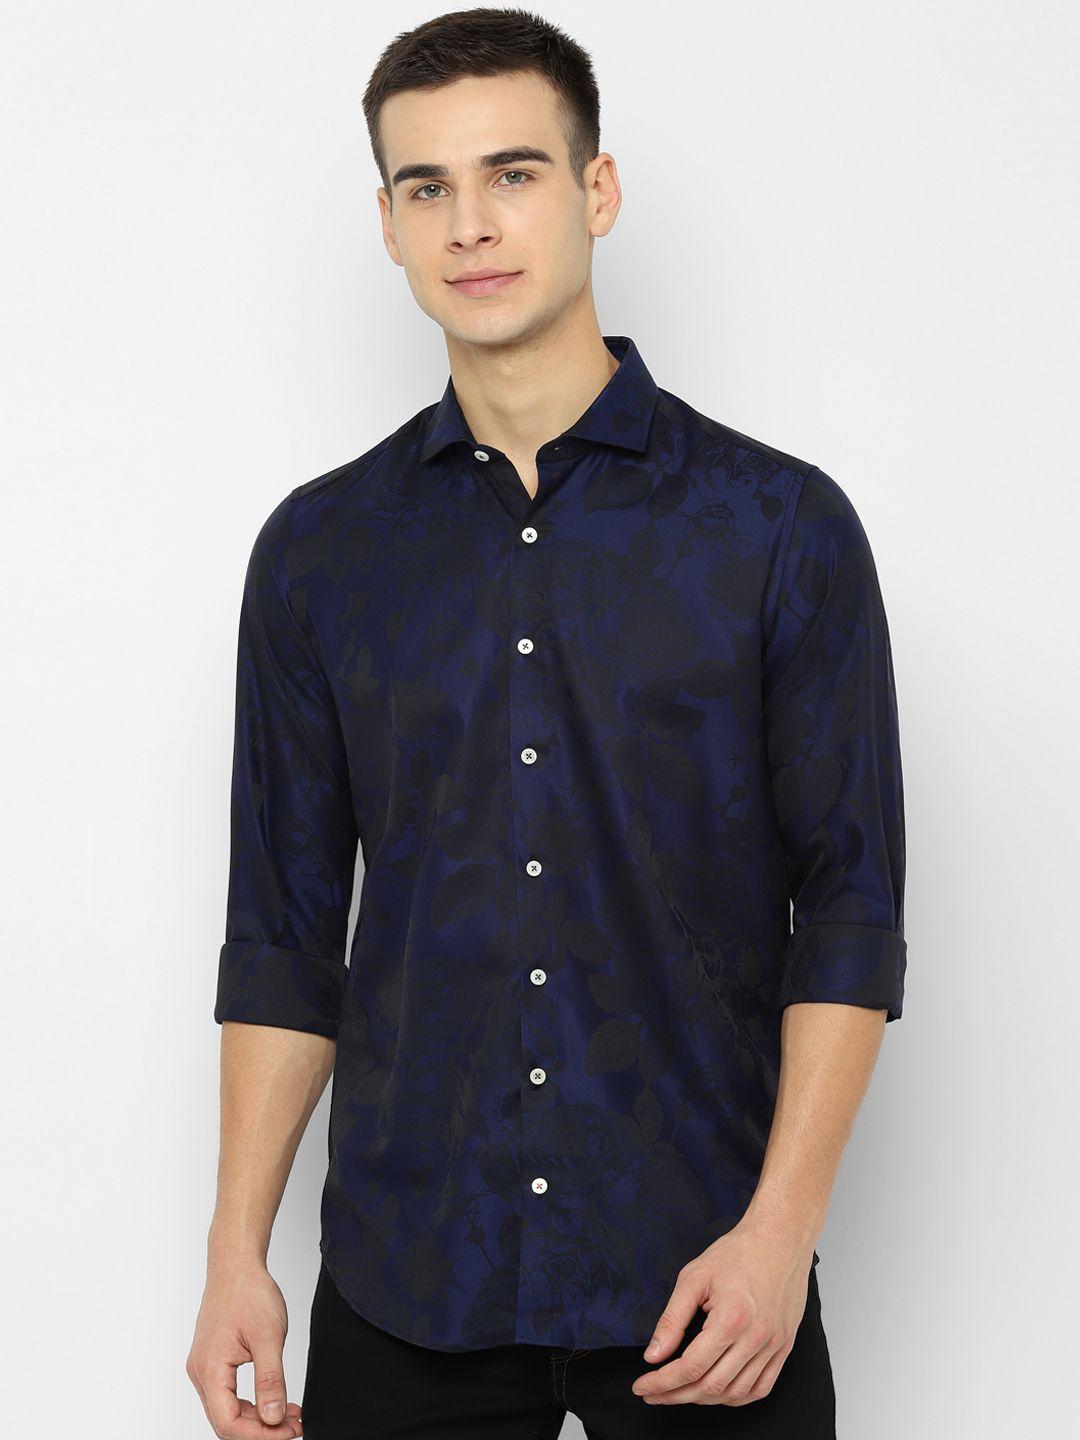 simon carter london men navy blue & black slim fit printed casual shirt